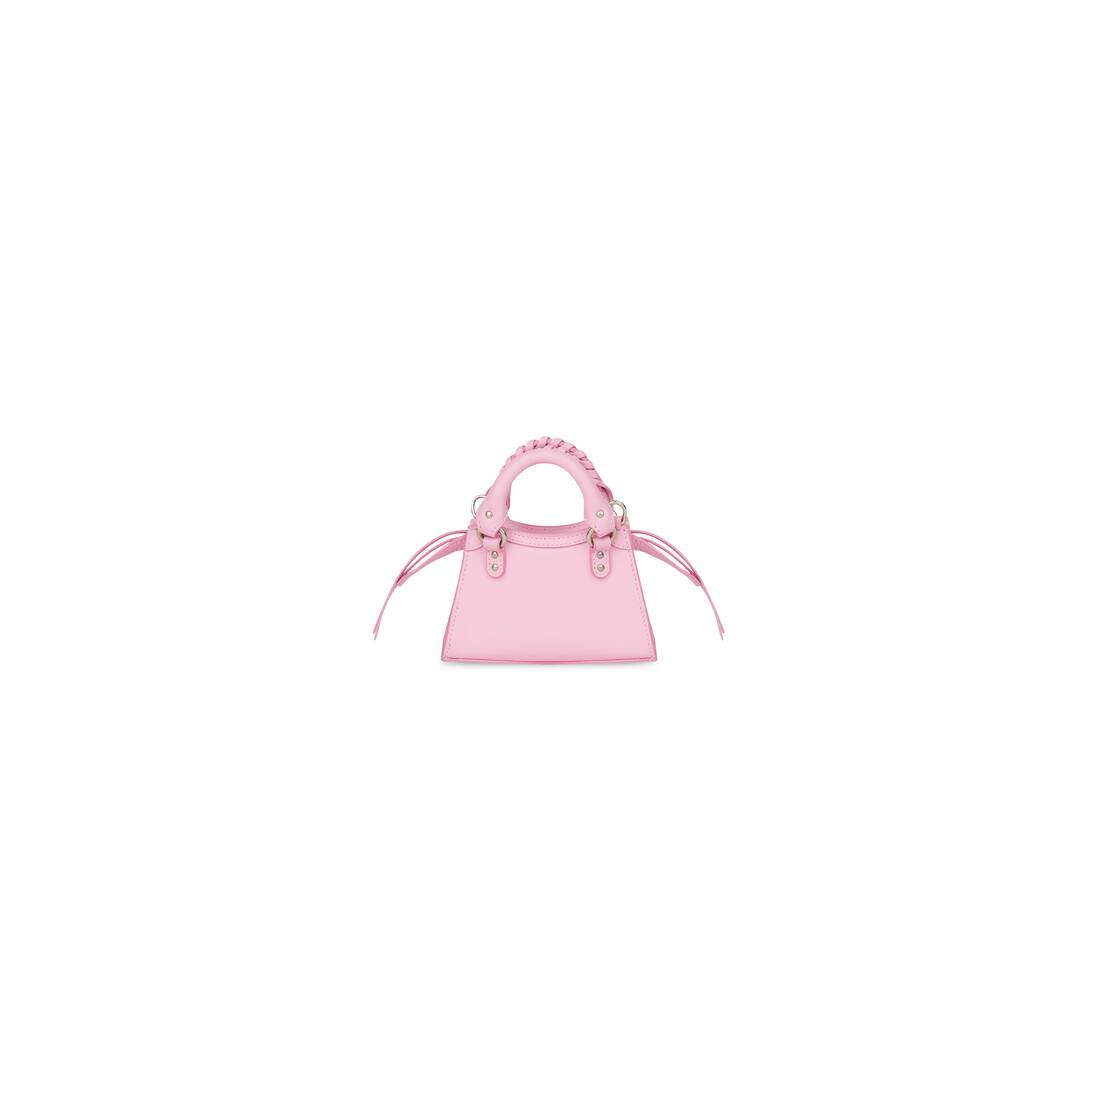 Women's Neo Classic Super Nano Handbag in Candy Pink